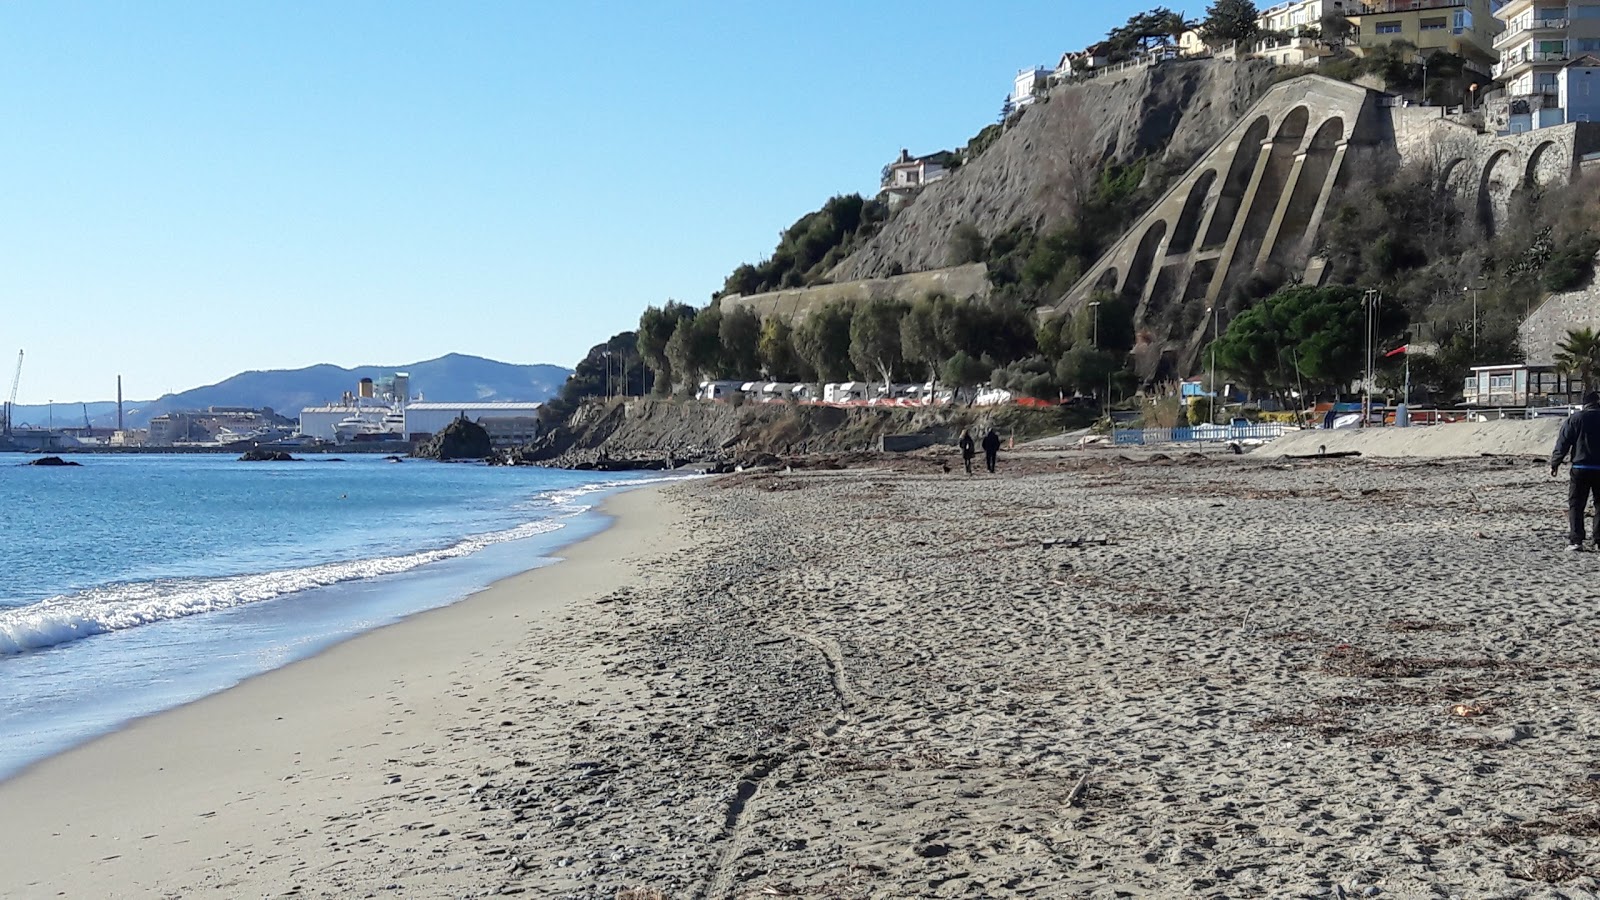 Fotografie cu Soleluna beach cu nivelul de curățenie in medie